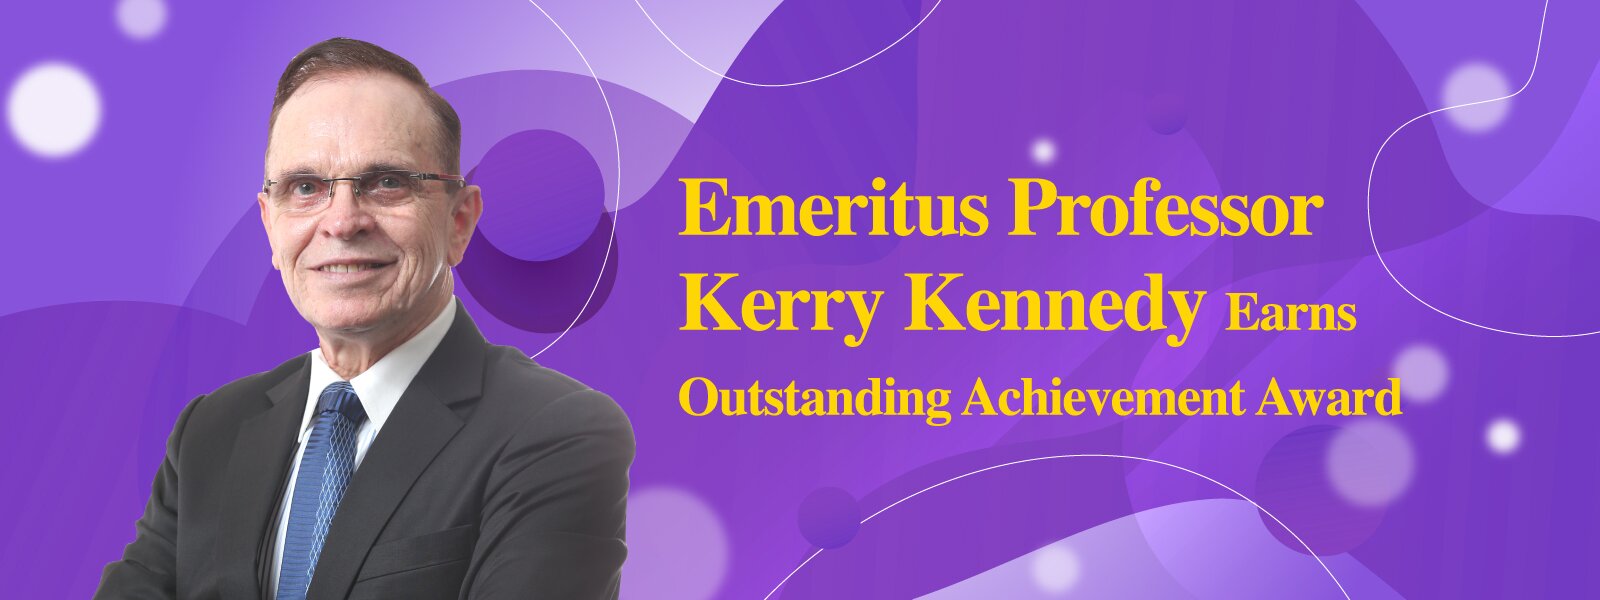 Emeritus Professor Kerry Kennedy Earns Outstanding Achievement Award